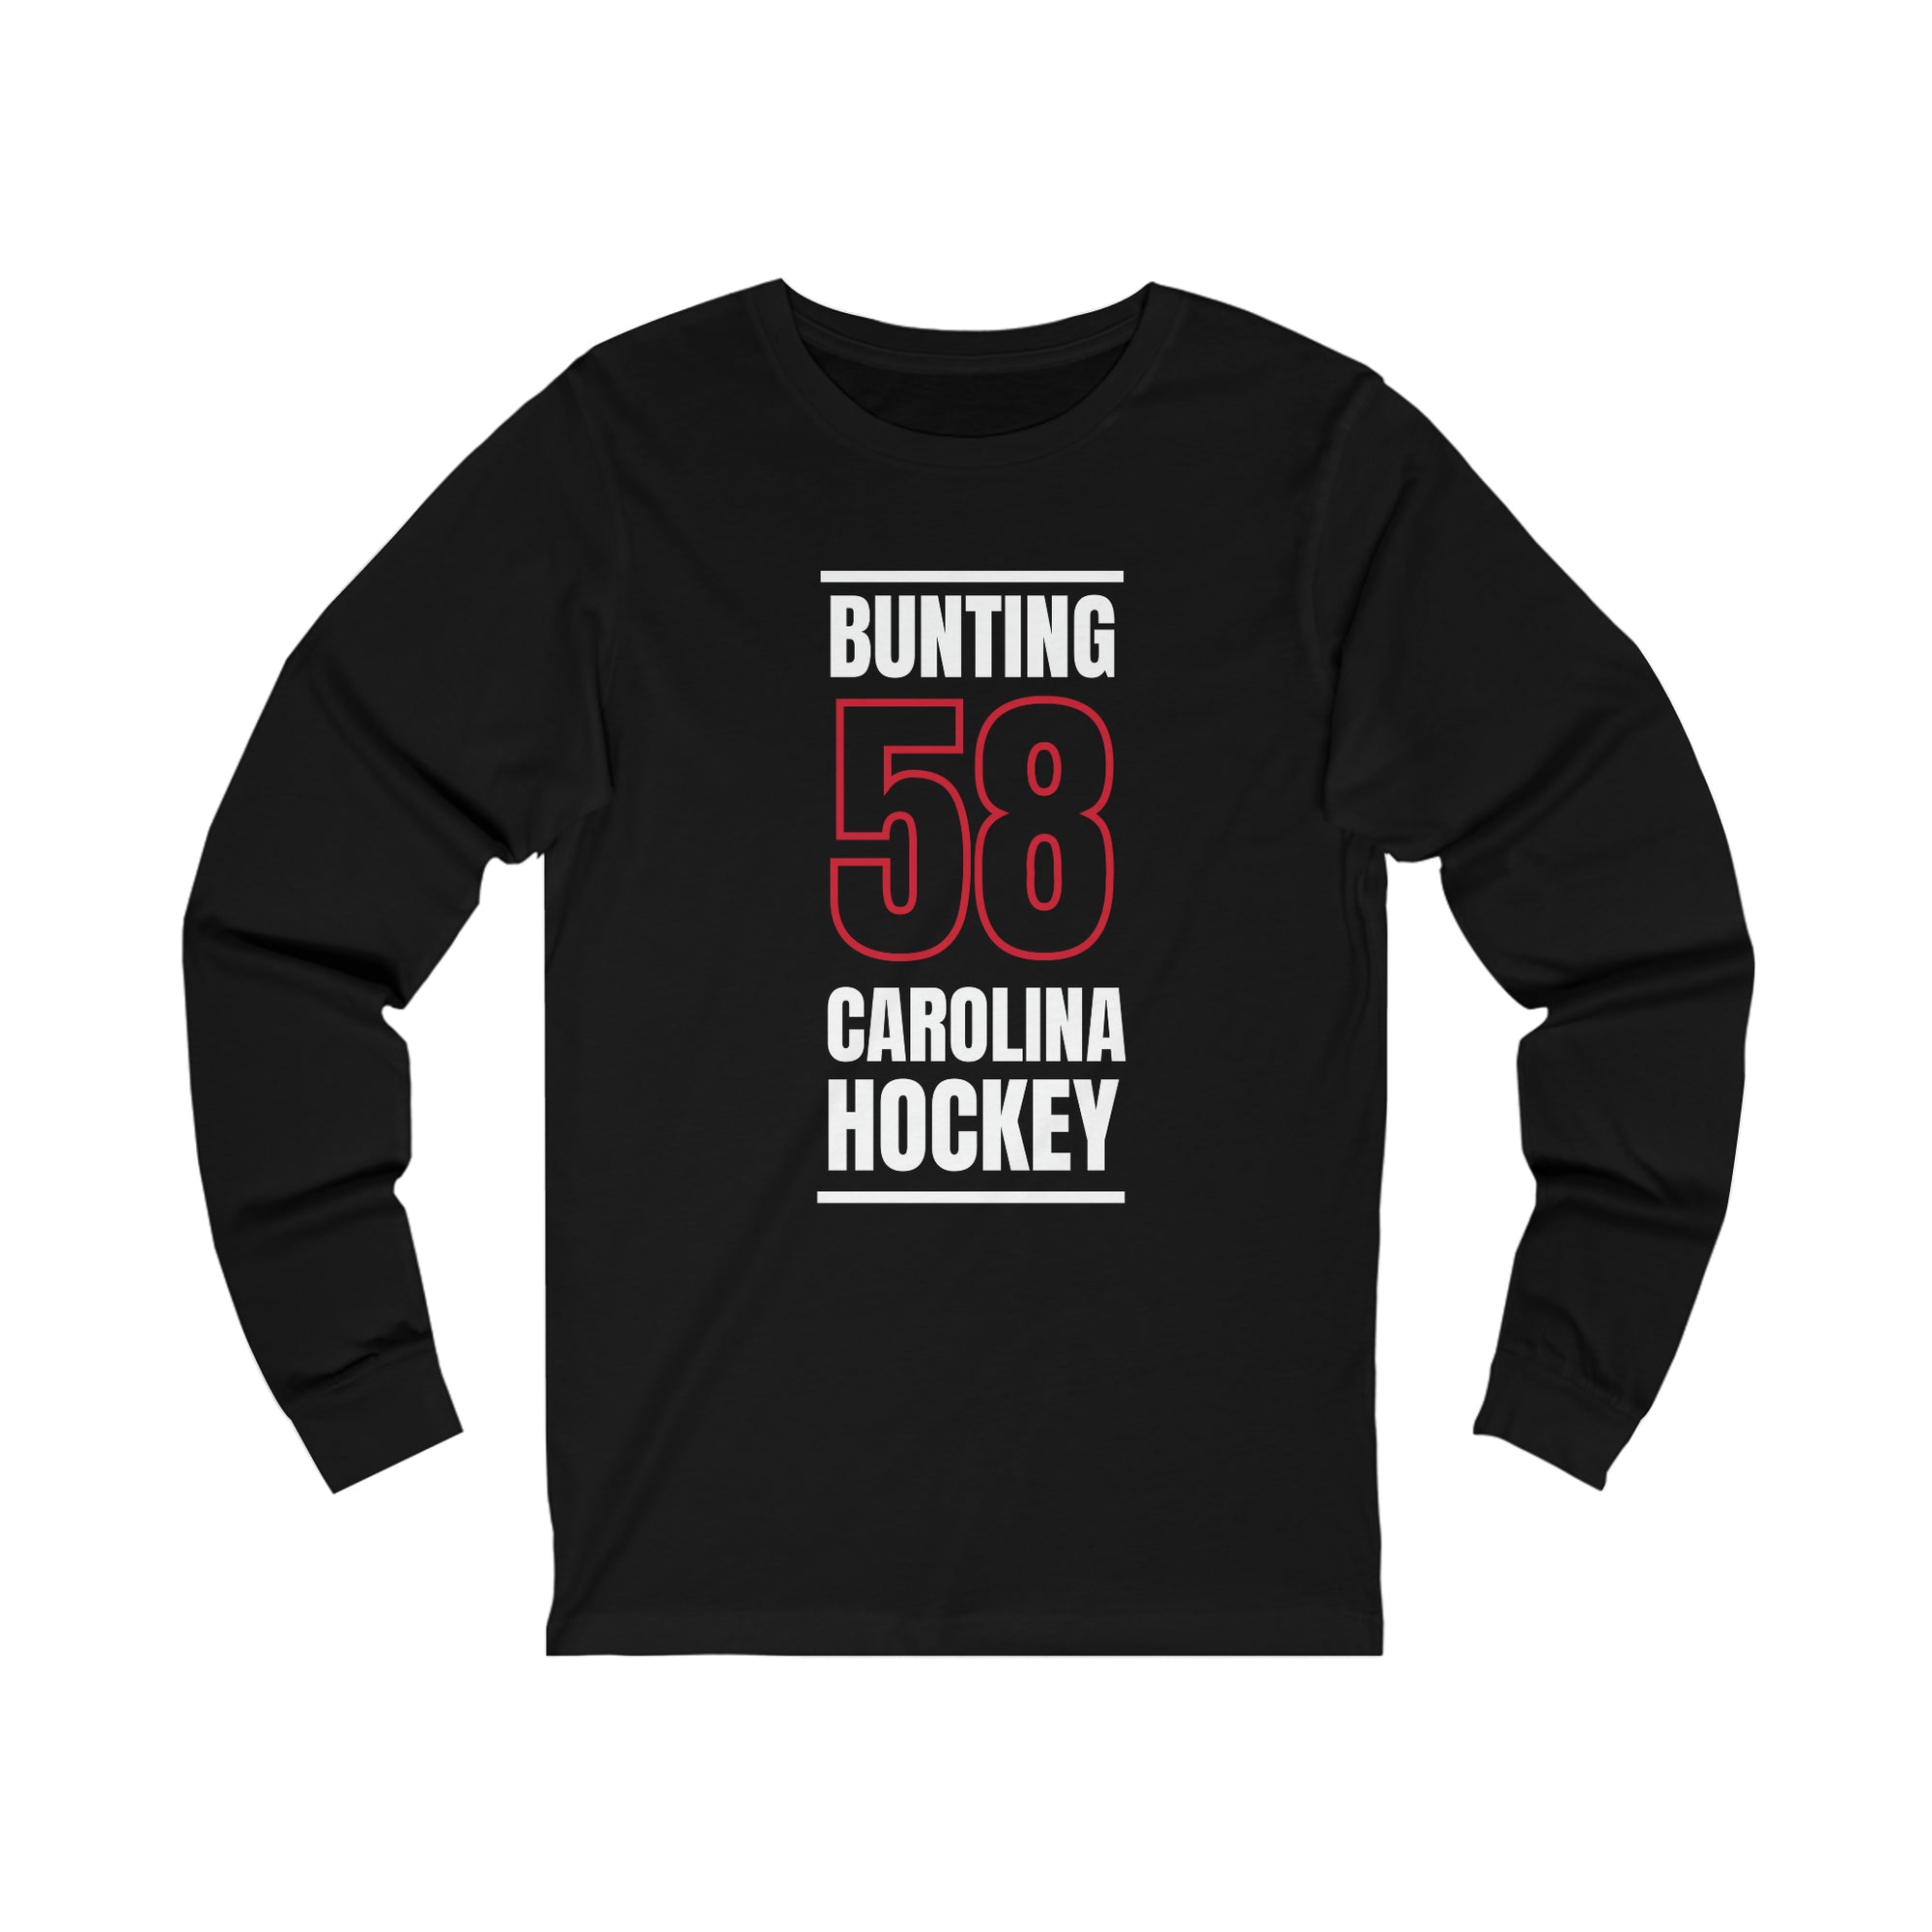 Bunting 58 Carolina Hockey Black Vertical Design Unisex Jersey Long Sleeve Shirt